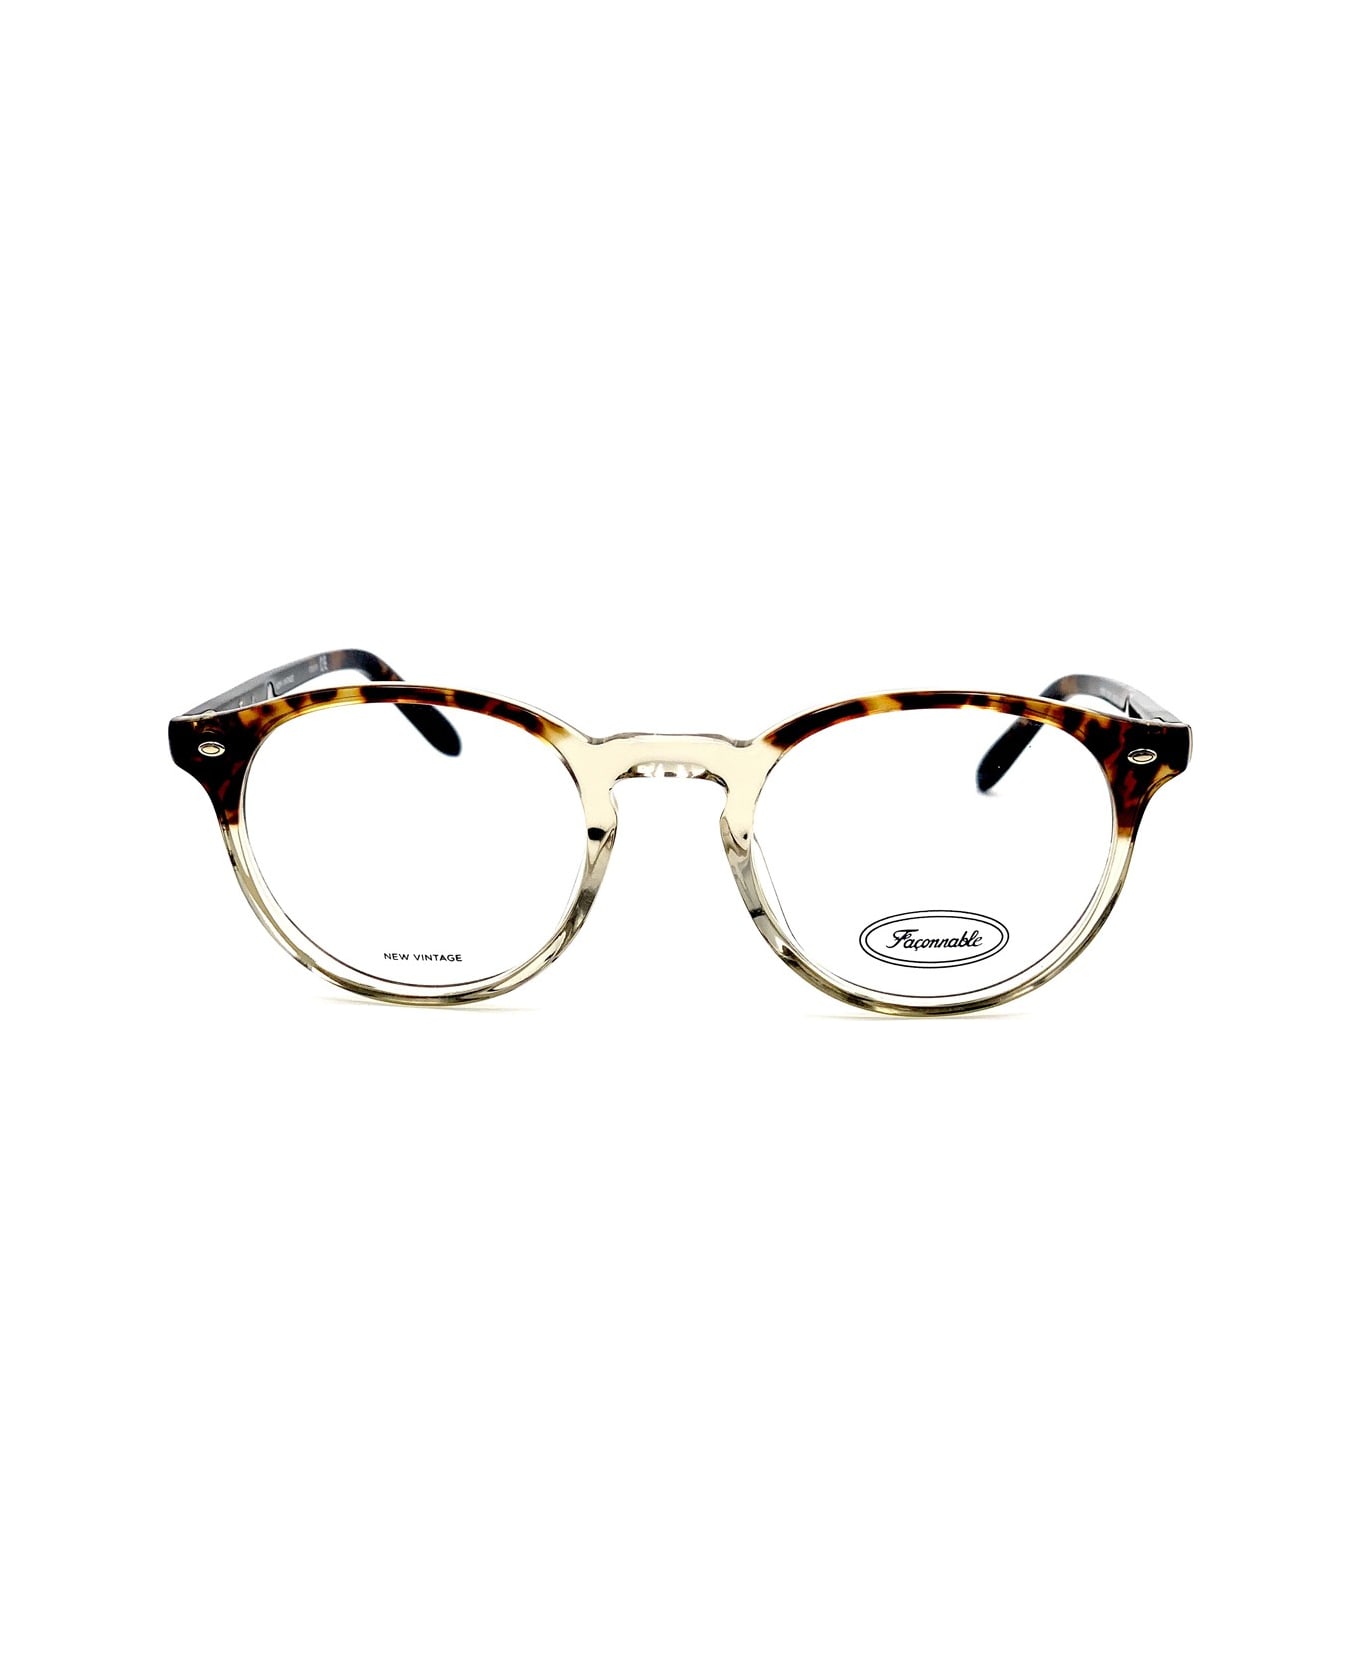 Faconnable Nv250 Ecnc Glasses - Beige アイウェア